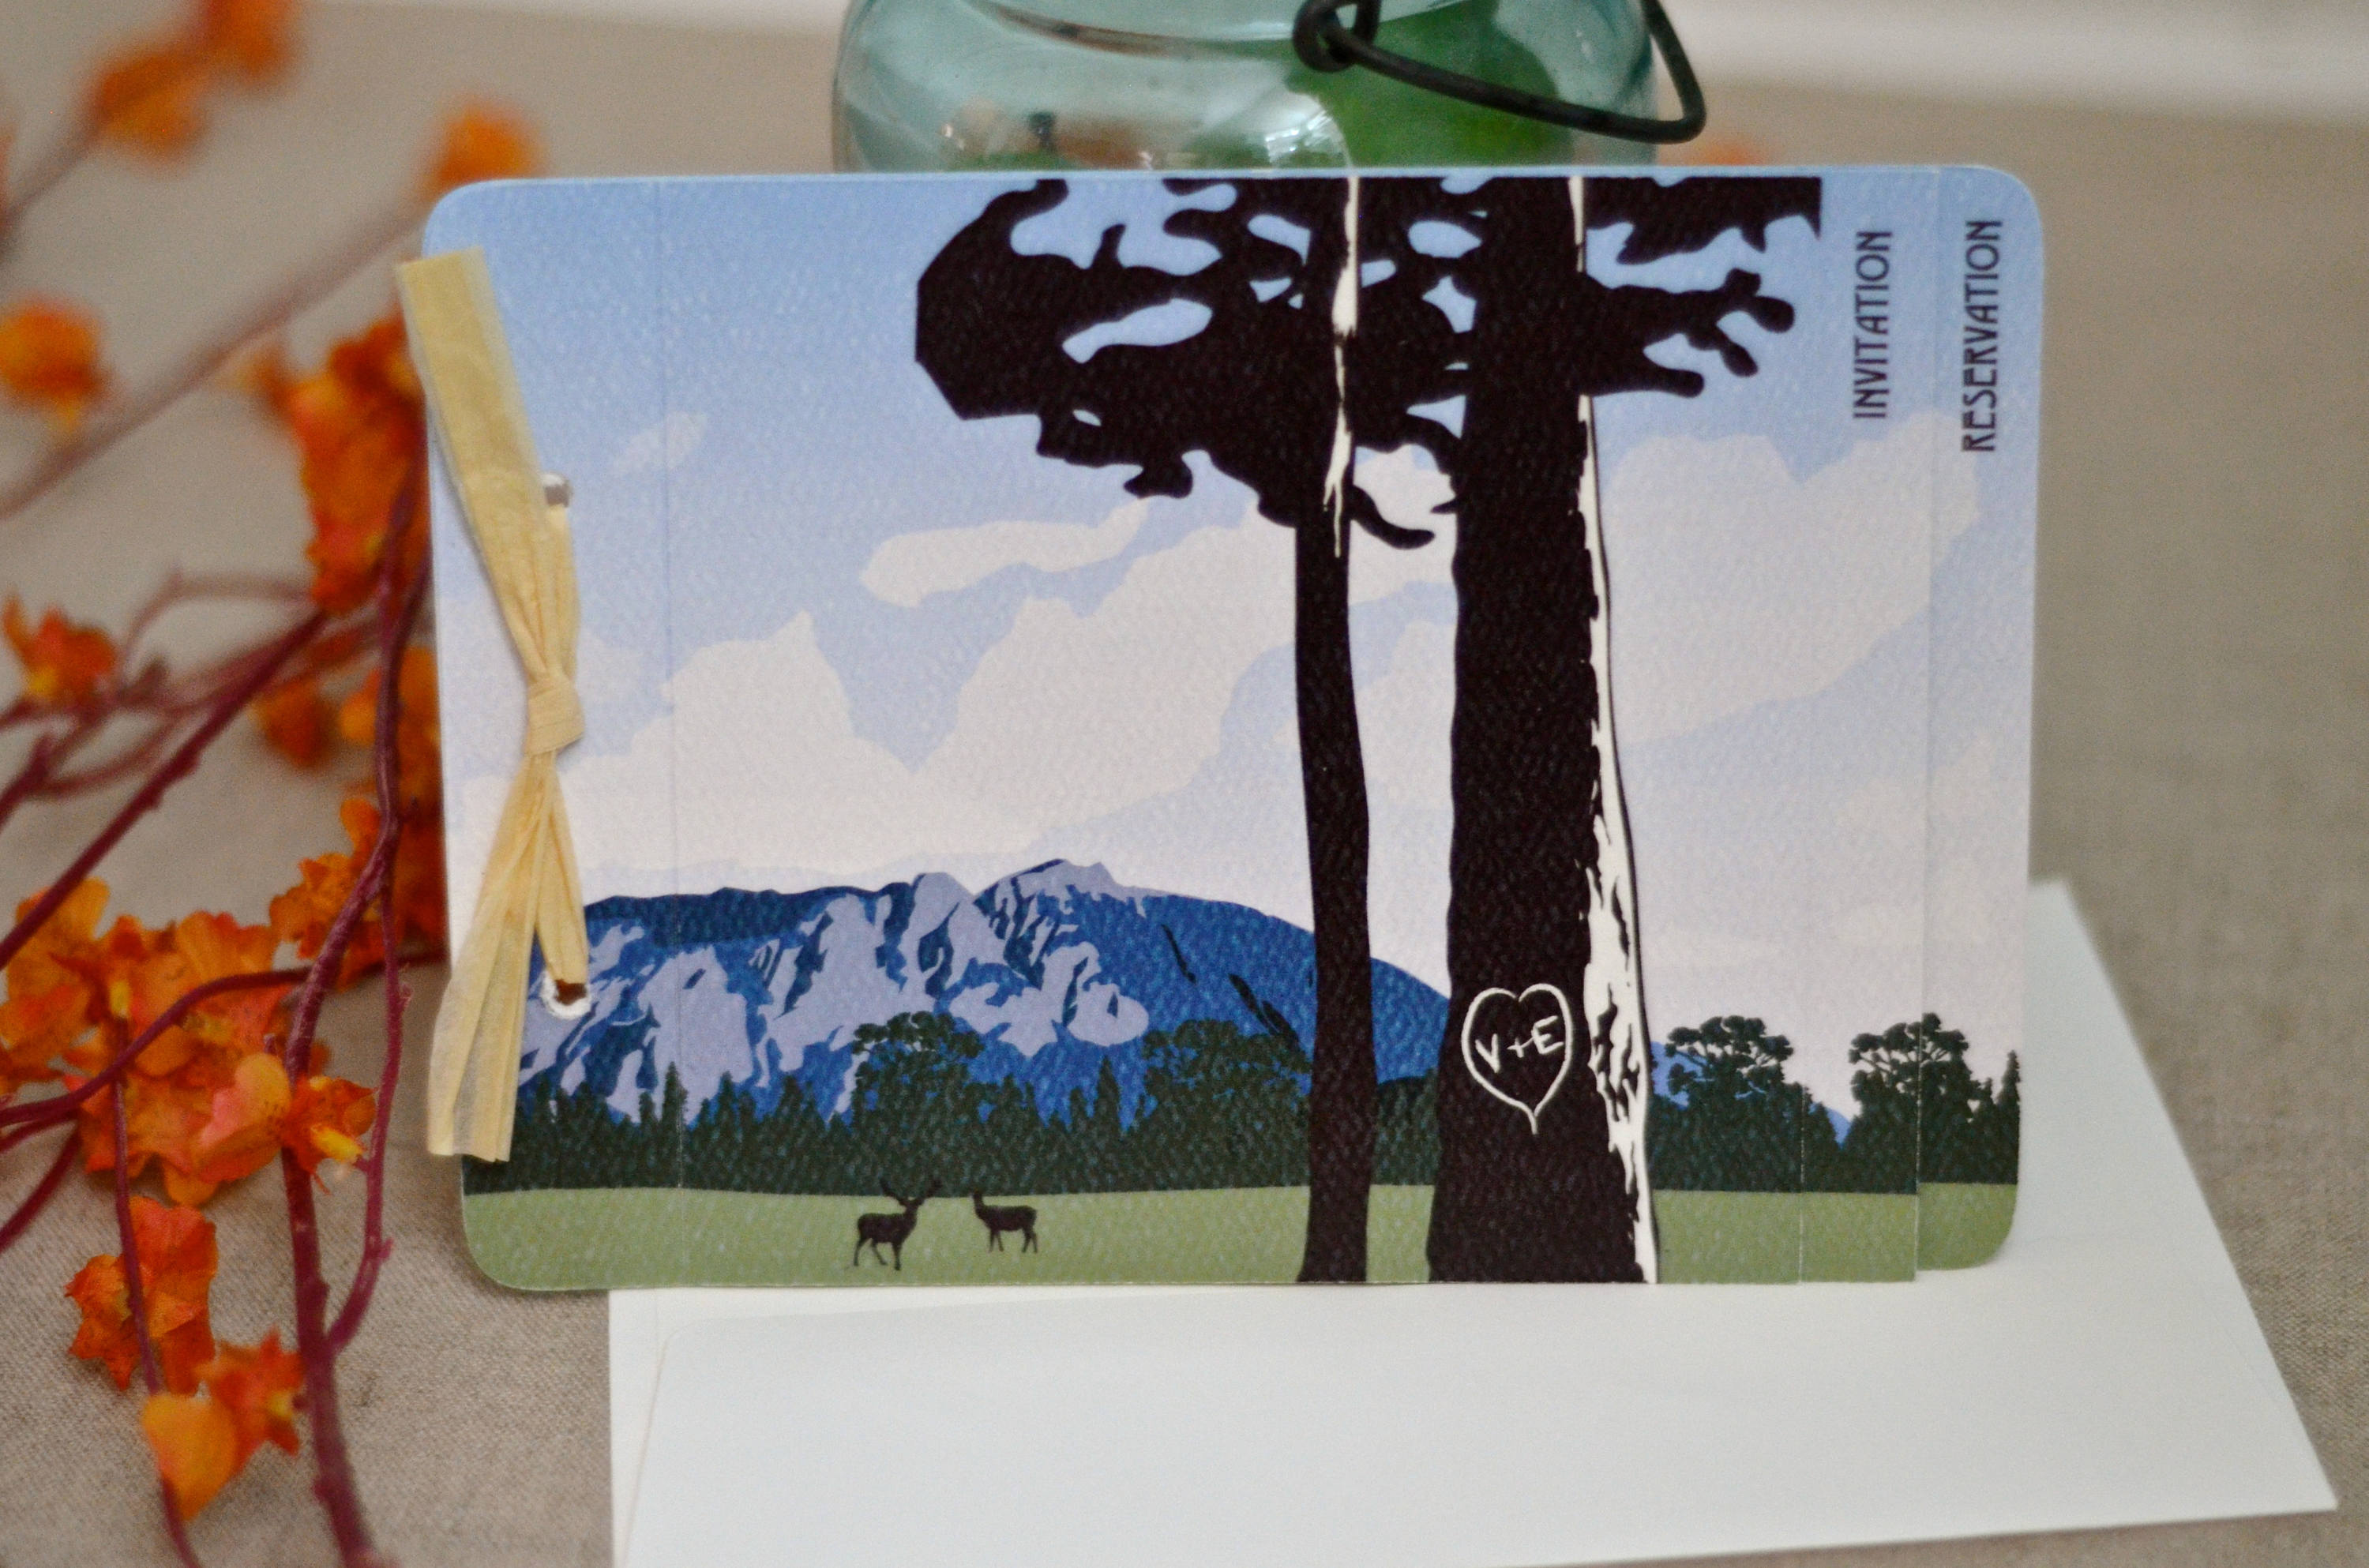 Mount Si Washington Mountain Summer Landscape with Elk Wedding Booklet Invitation // Wedding Invitation Booklet Style with Postcard RSVP